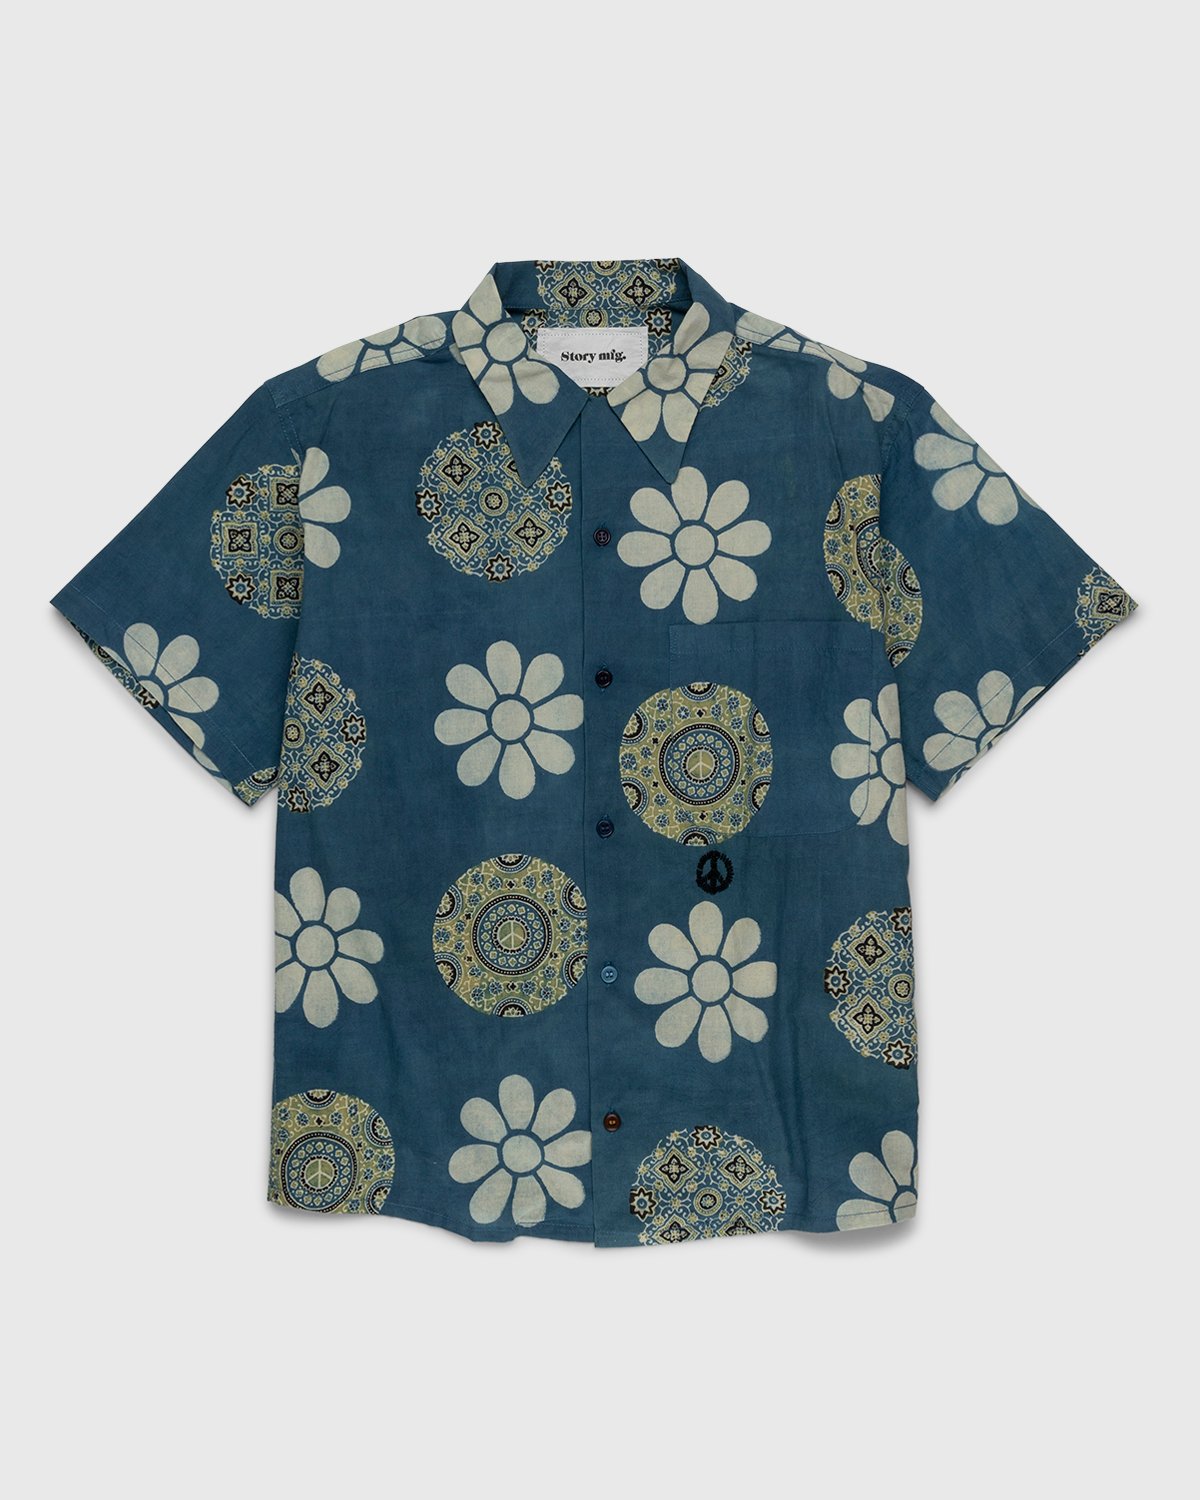 Story mfg. - Shore Shirt Indigo Flower Portal Print Blue - Clothing - Blue - Image 1